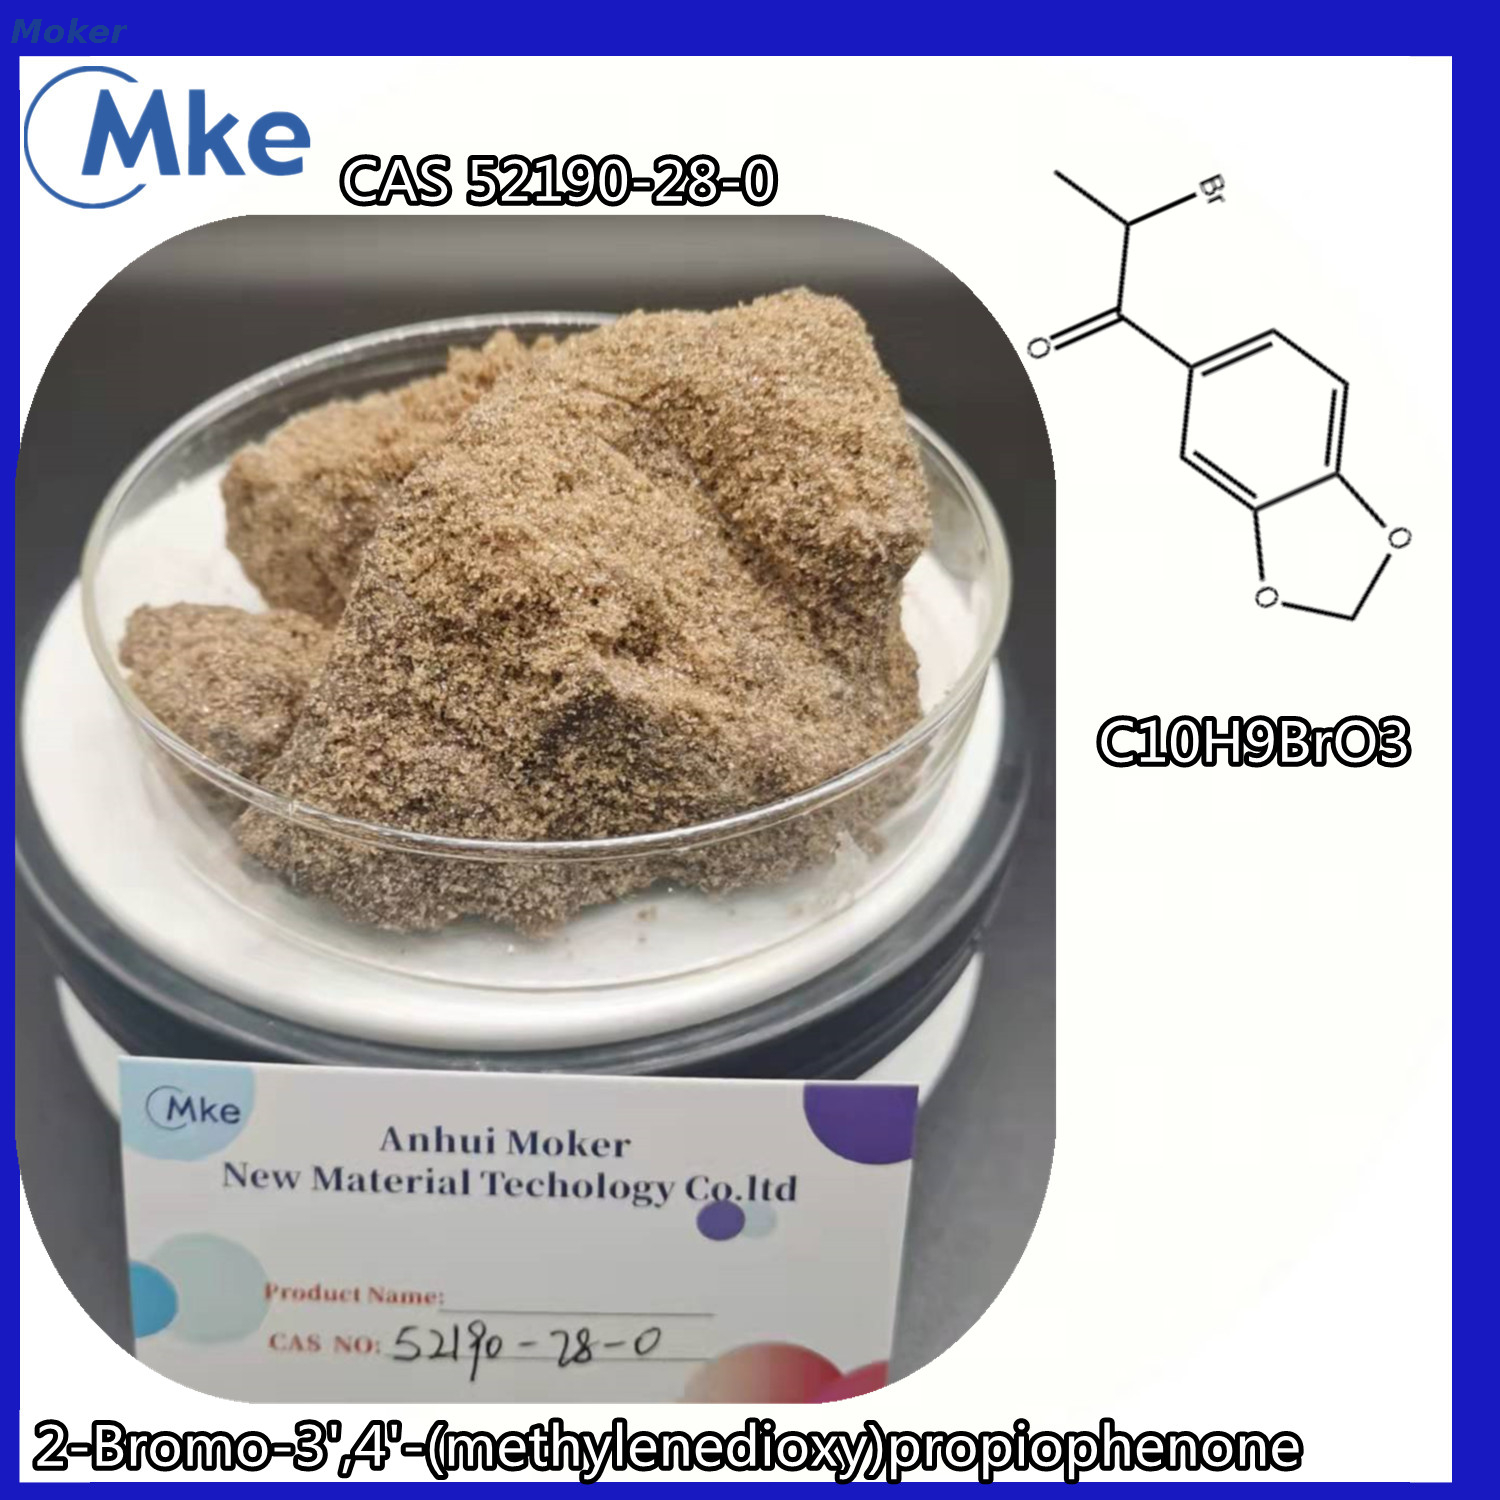 Brown Crystal Powder Pharmaceutical Intermediates Cas 52190-28-0 2-Bromo-3',4'-(methylenedioxy)propiophenone 